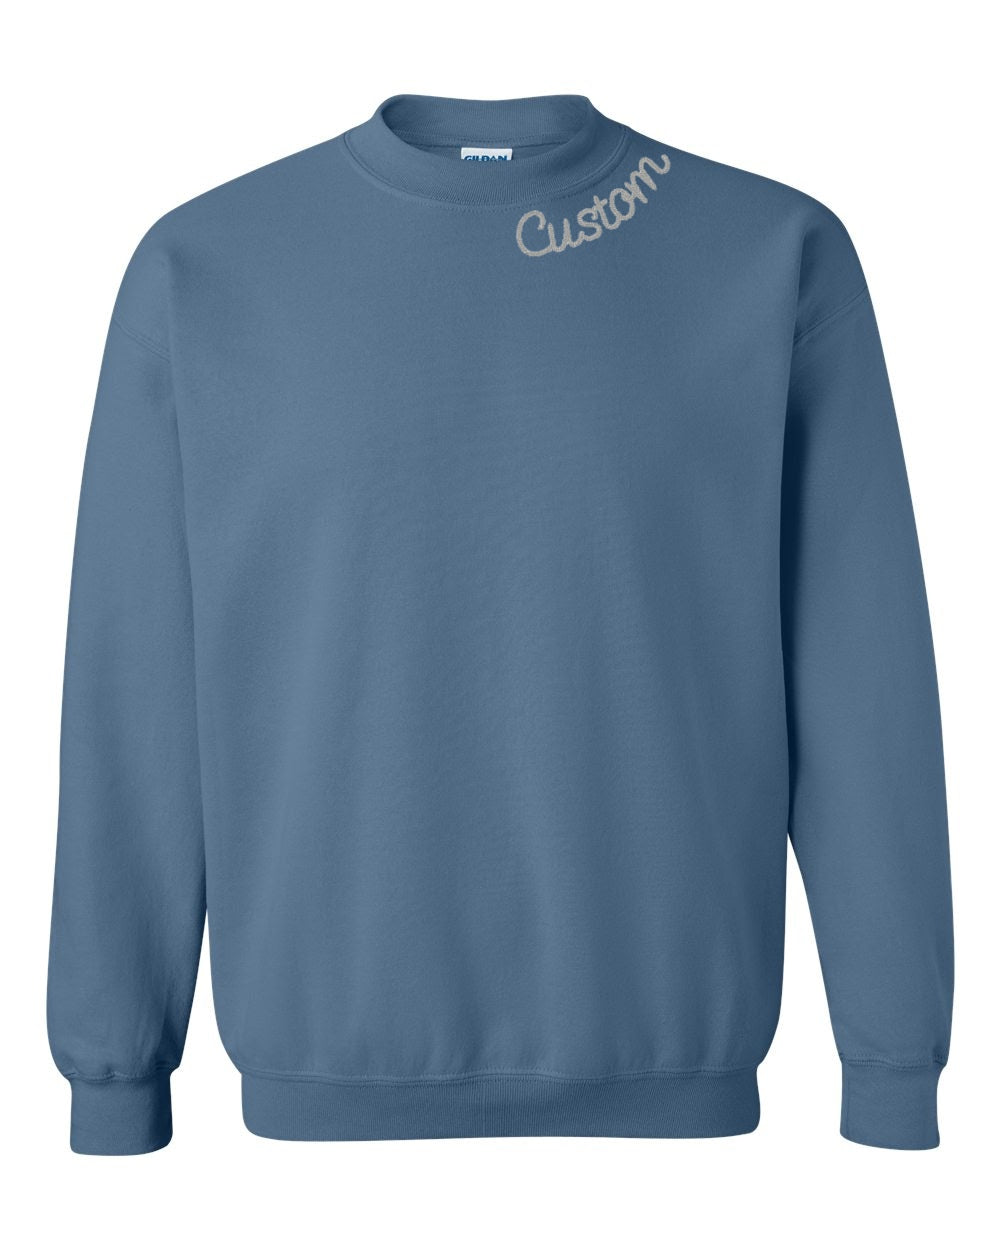 Indigo Blue Custom Embroidered Crewneck Sweatshirt - Personalized Chain Stitch